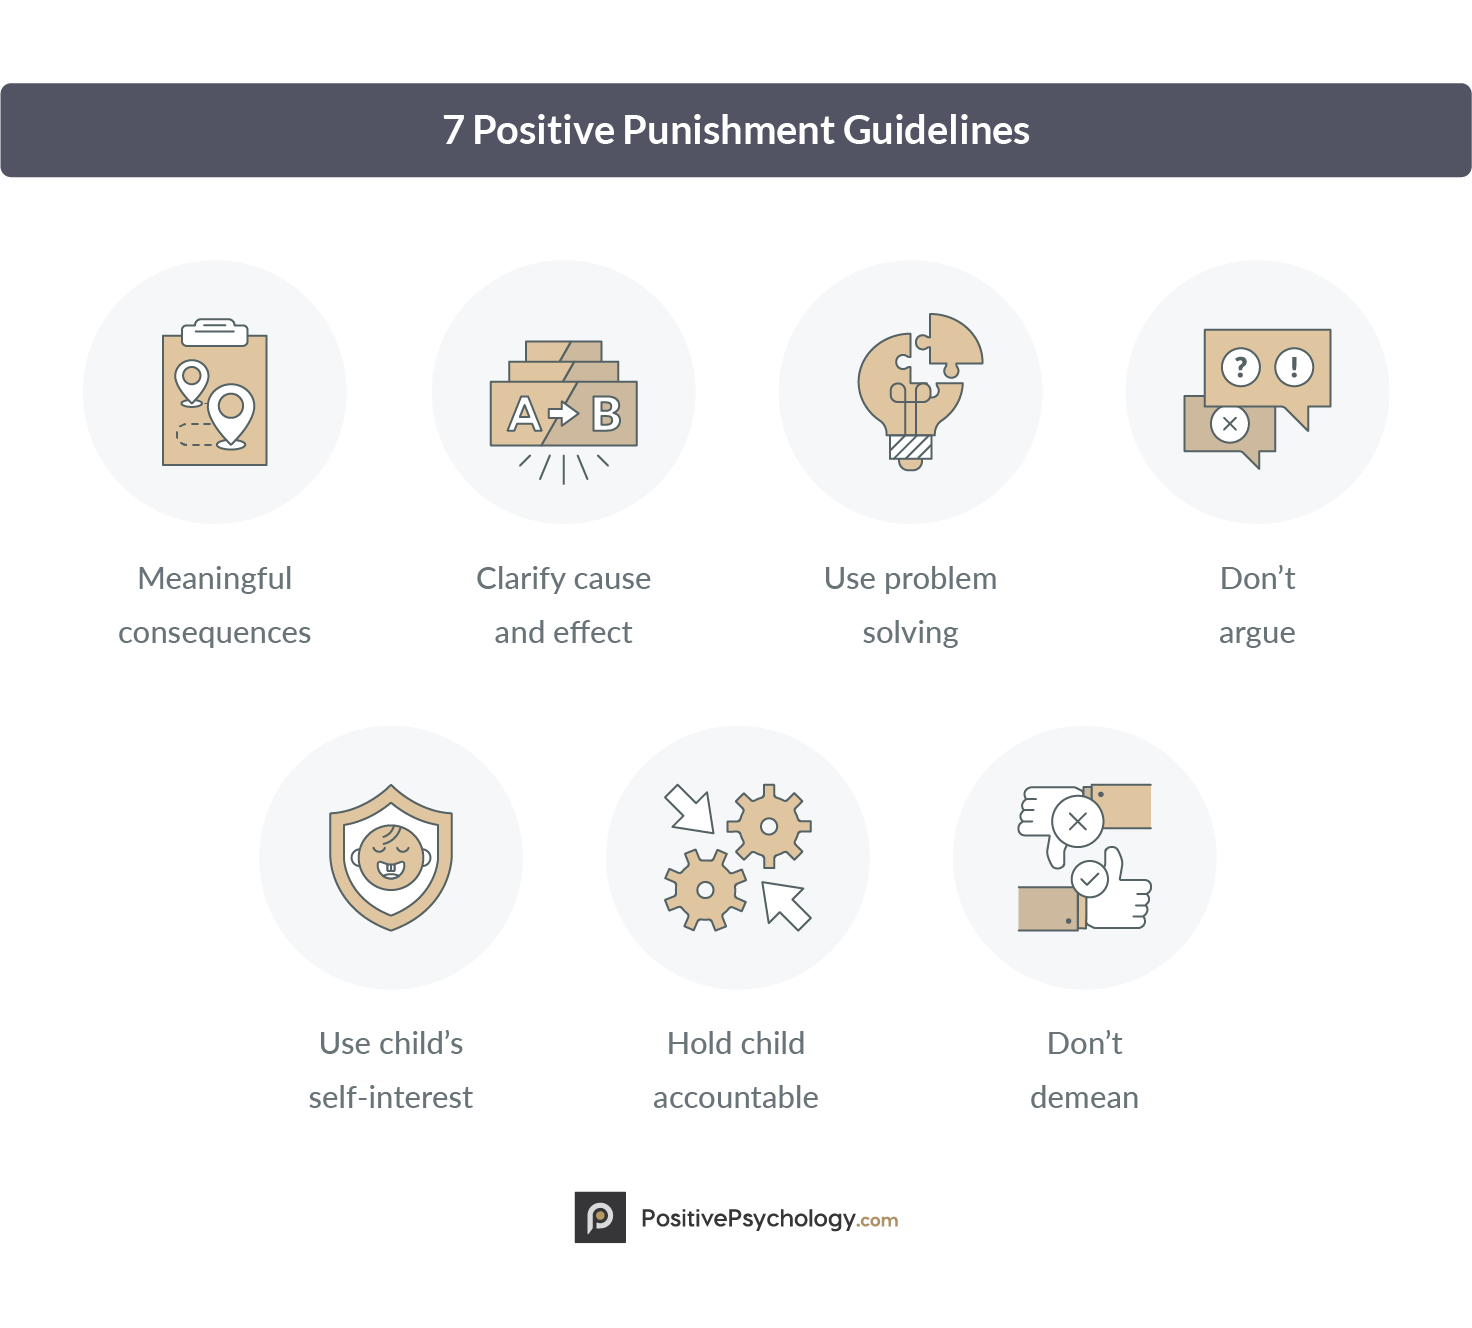 7 Positive Punishment Guidelines